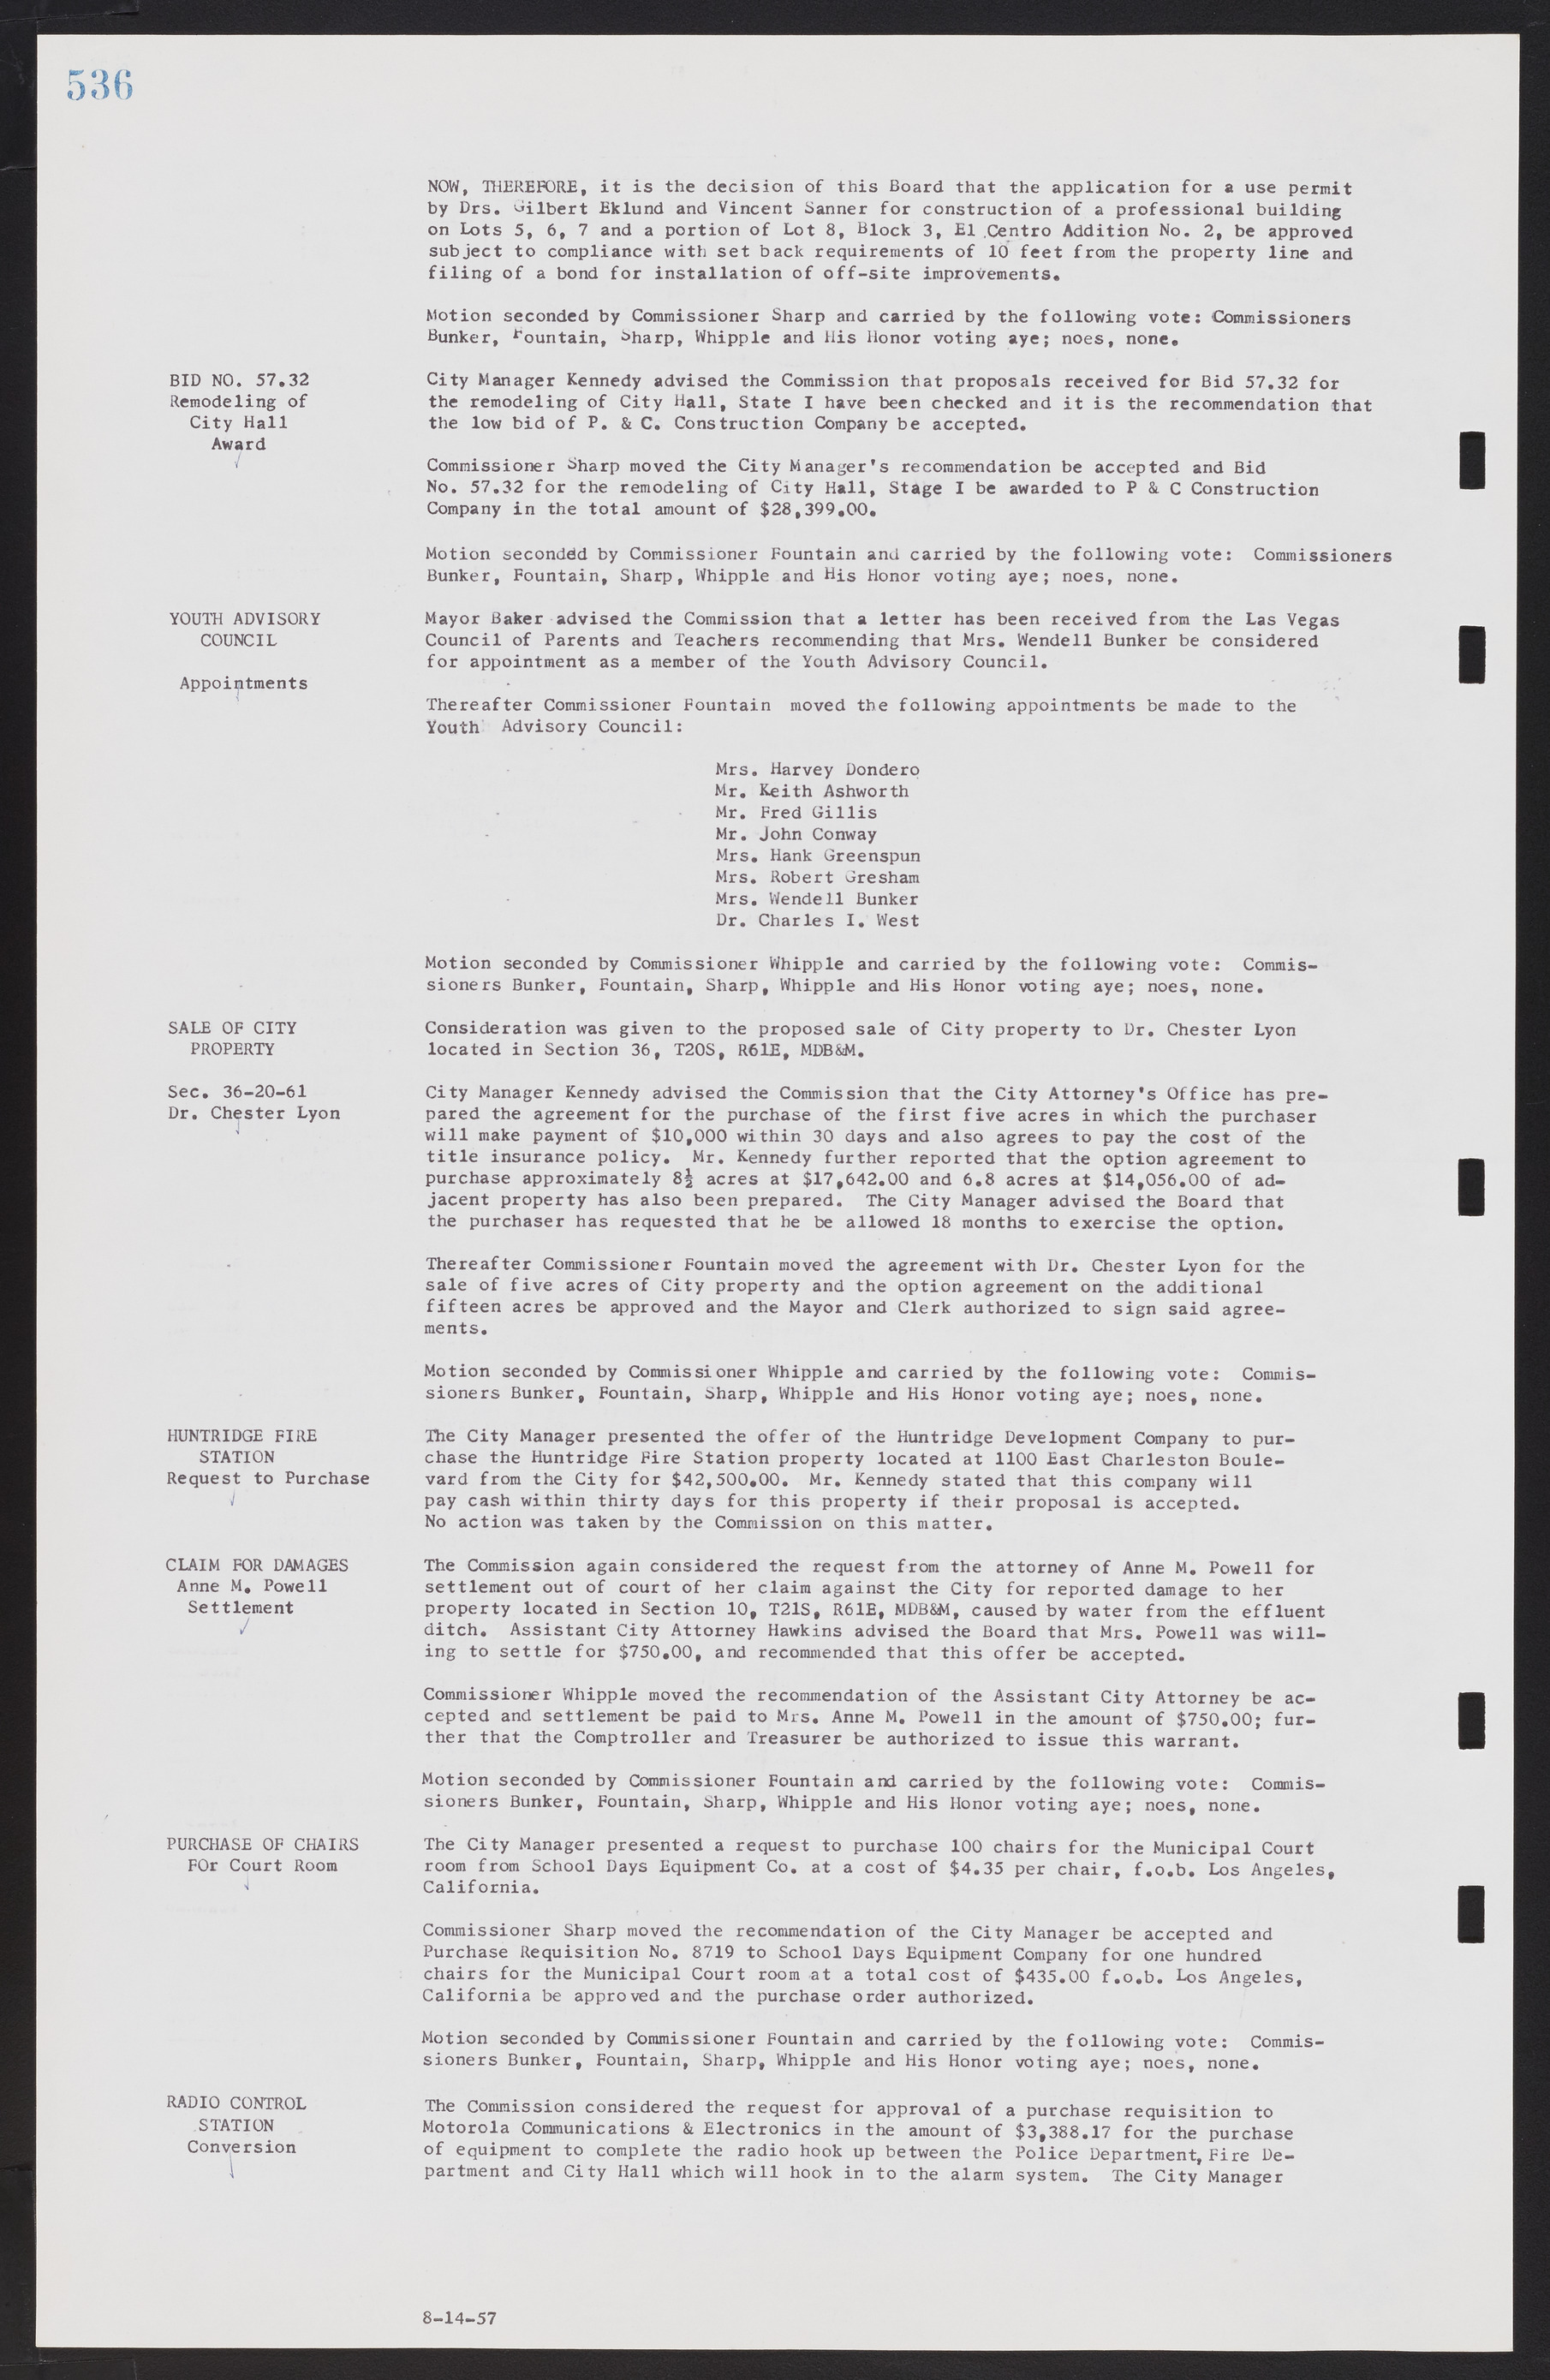 Las Vegas City Commission Minutes, September 21, 1955 to November 20, 1957, lvc000010-556